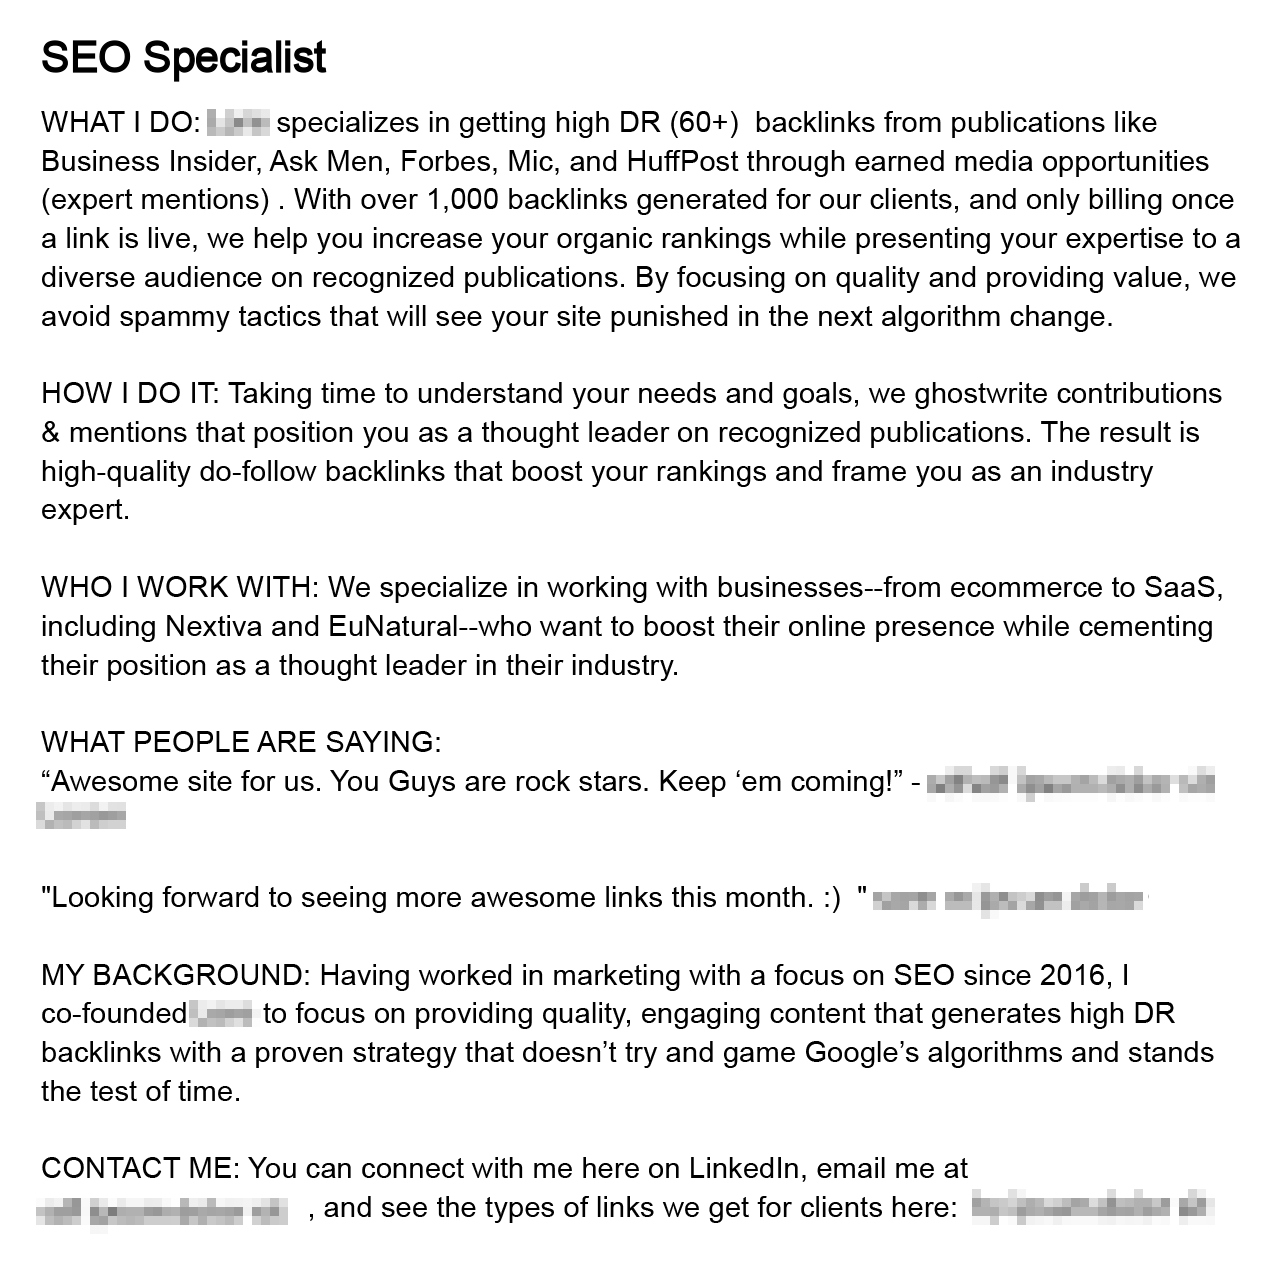 SEO Specialist LinkedIn summary example